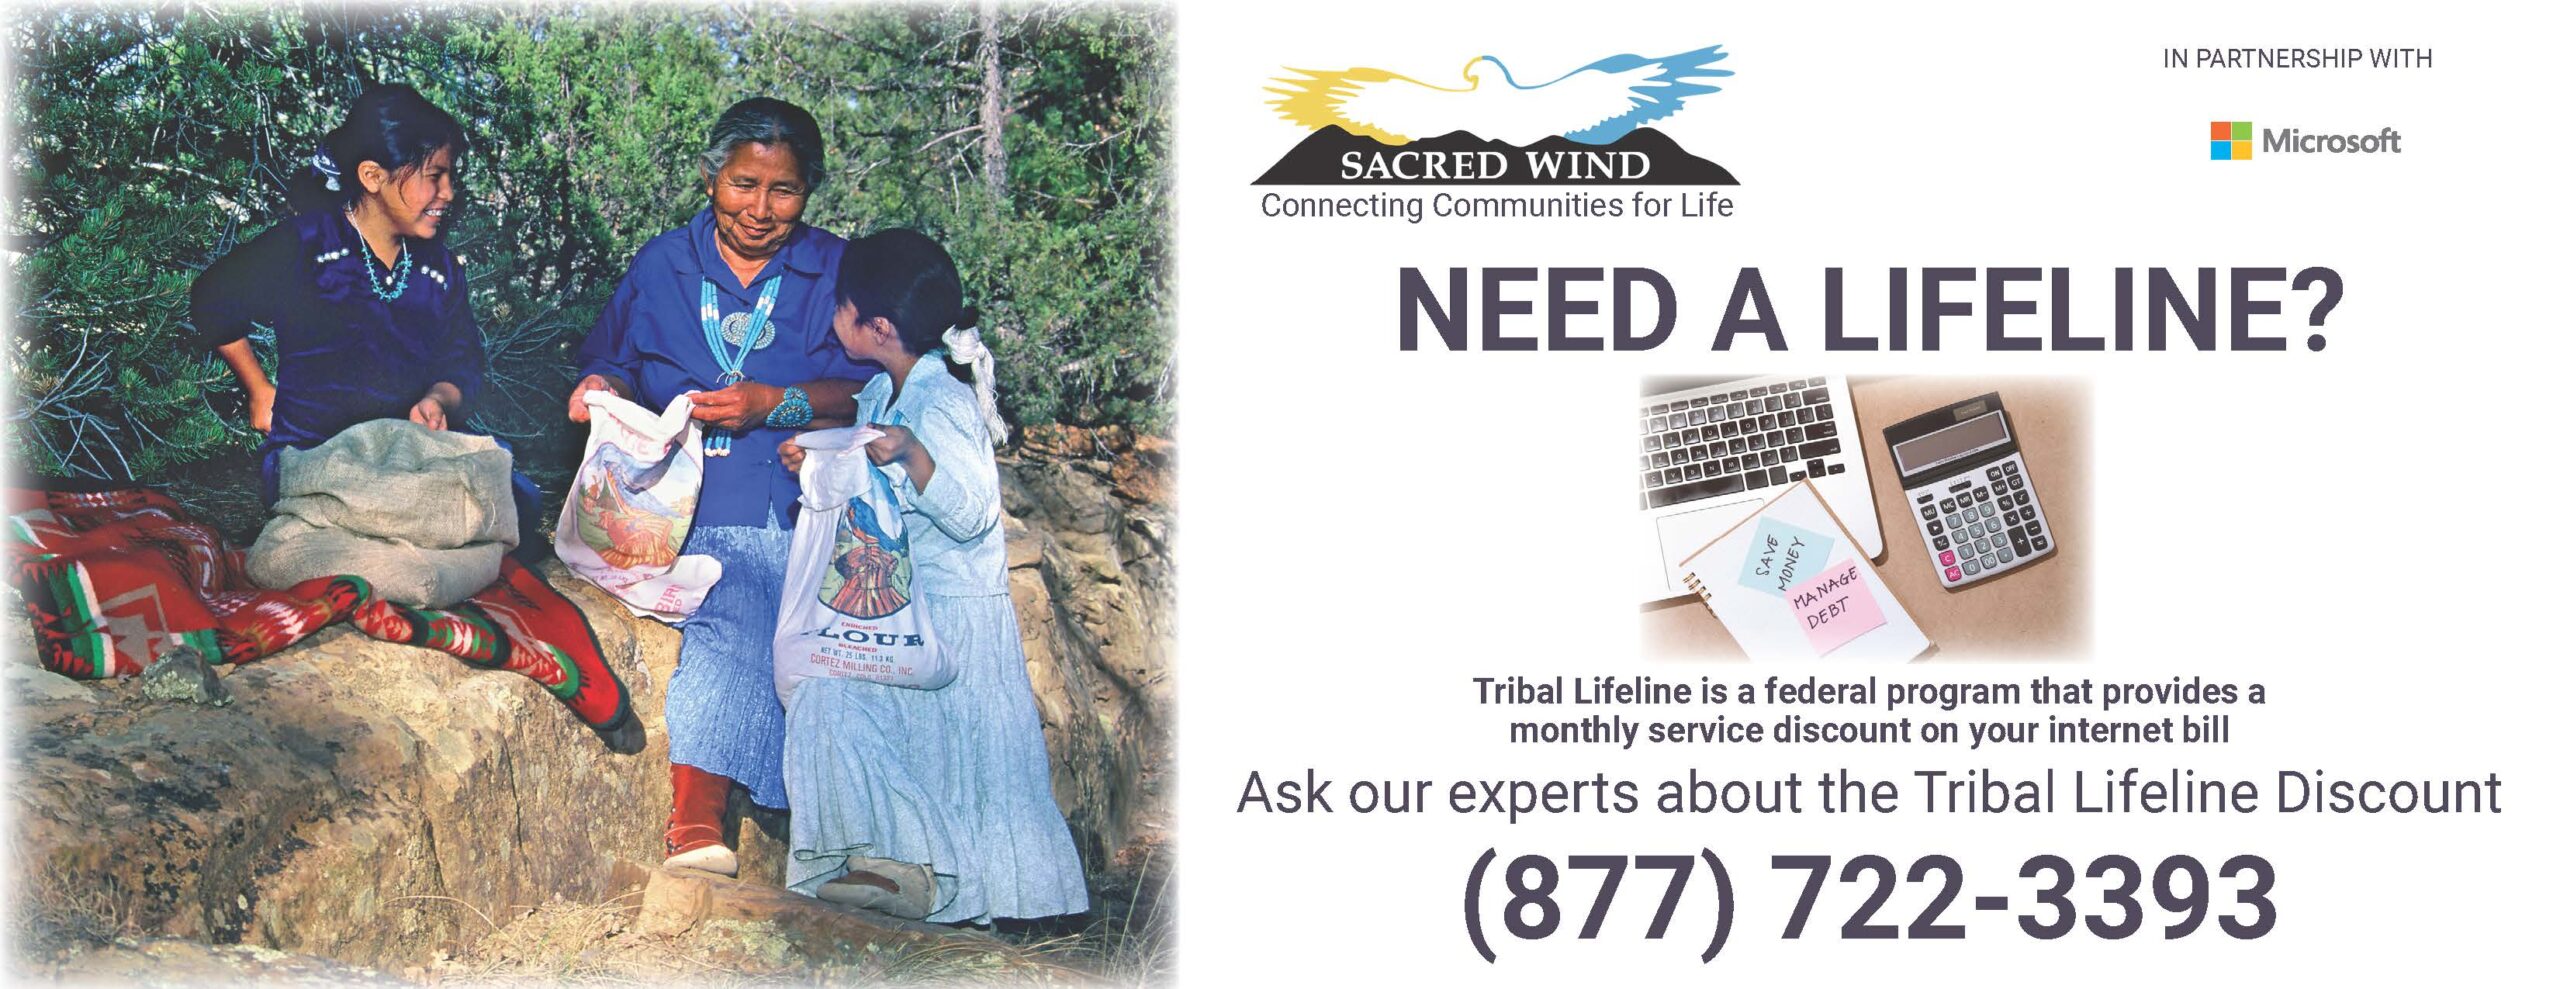 Sacred-Wind-Tribal-Lifeline-Handout.4.25x11.11.14.19_Page_1-1